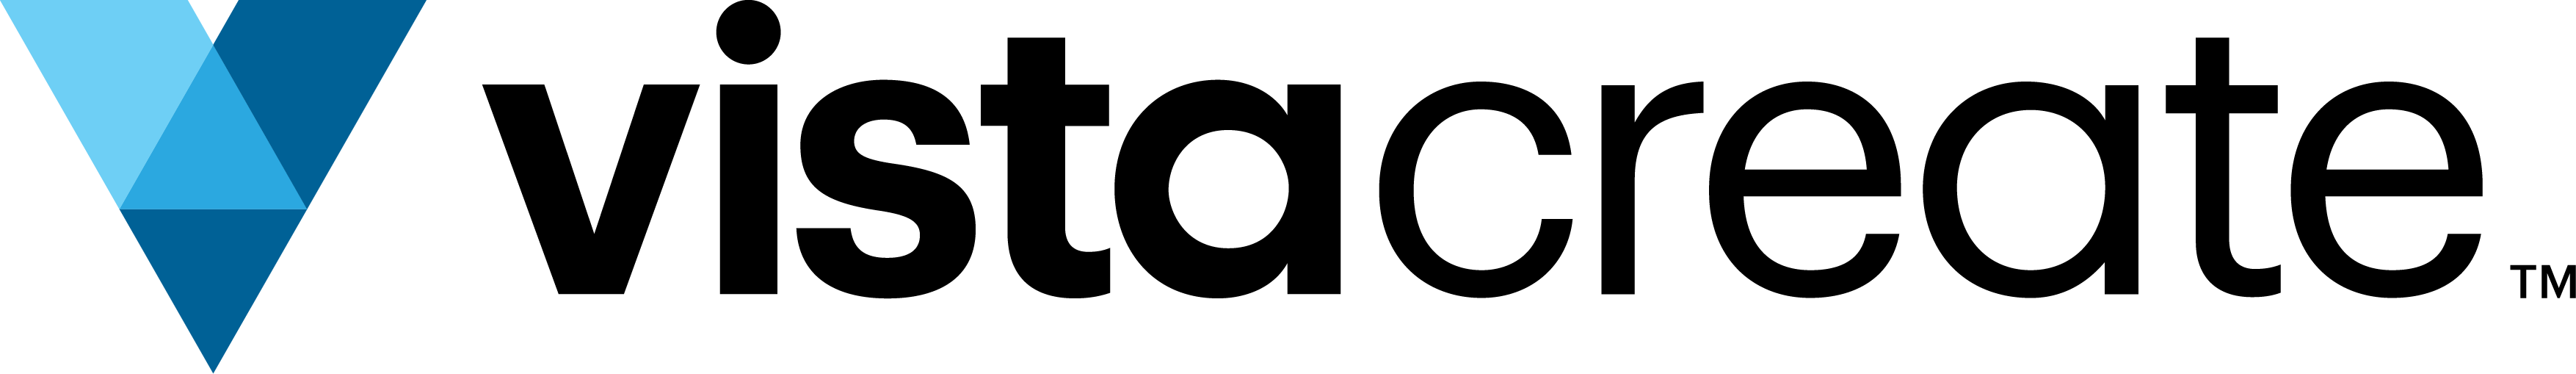 vista-create-logo